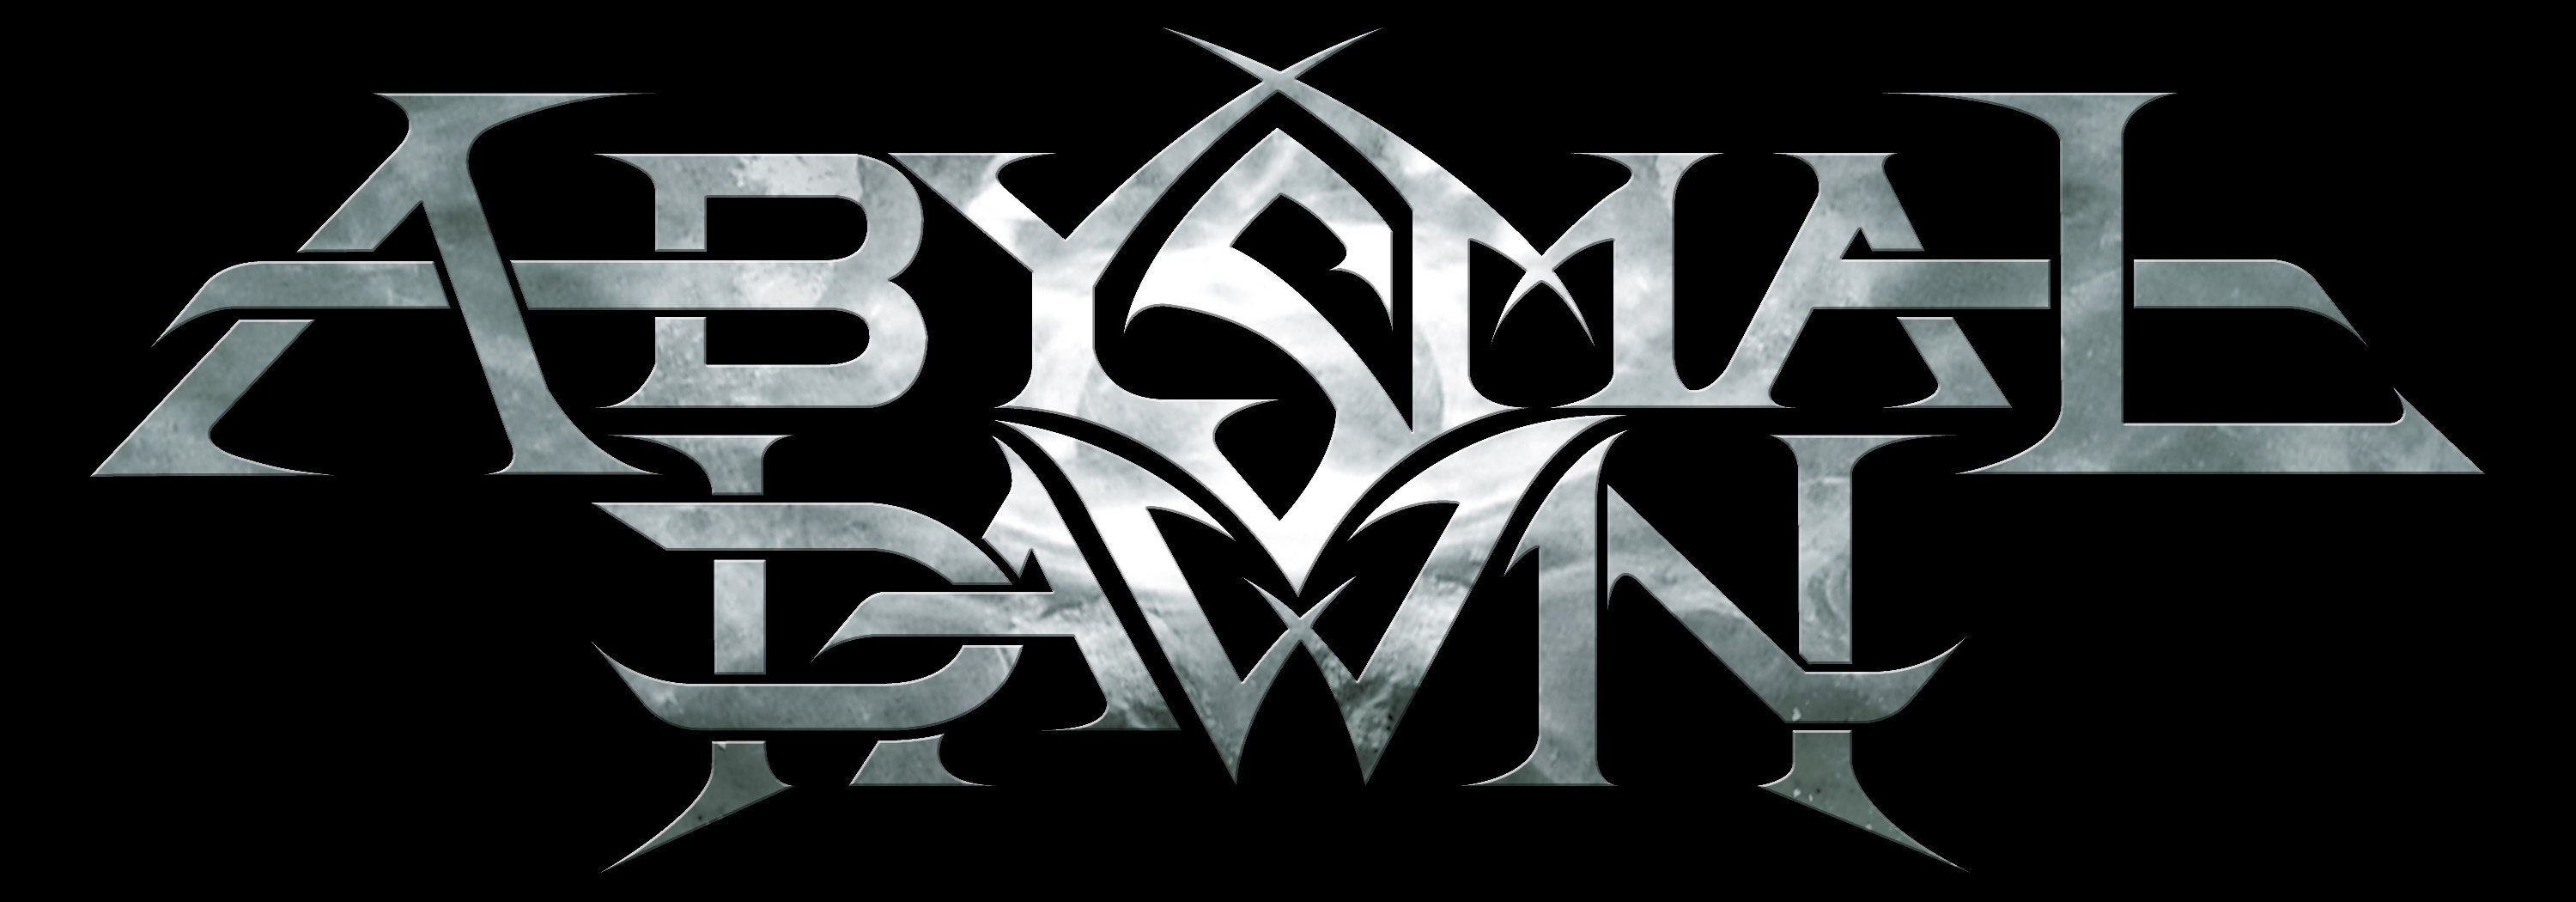 abysmal, Dawn, Death, Metal, Heavy, 1adawn, Poster Wallpaper